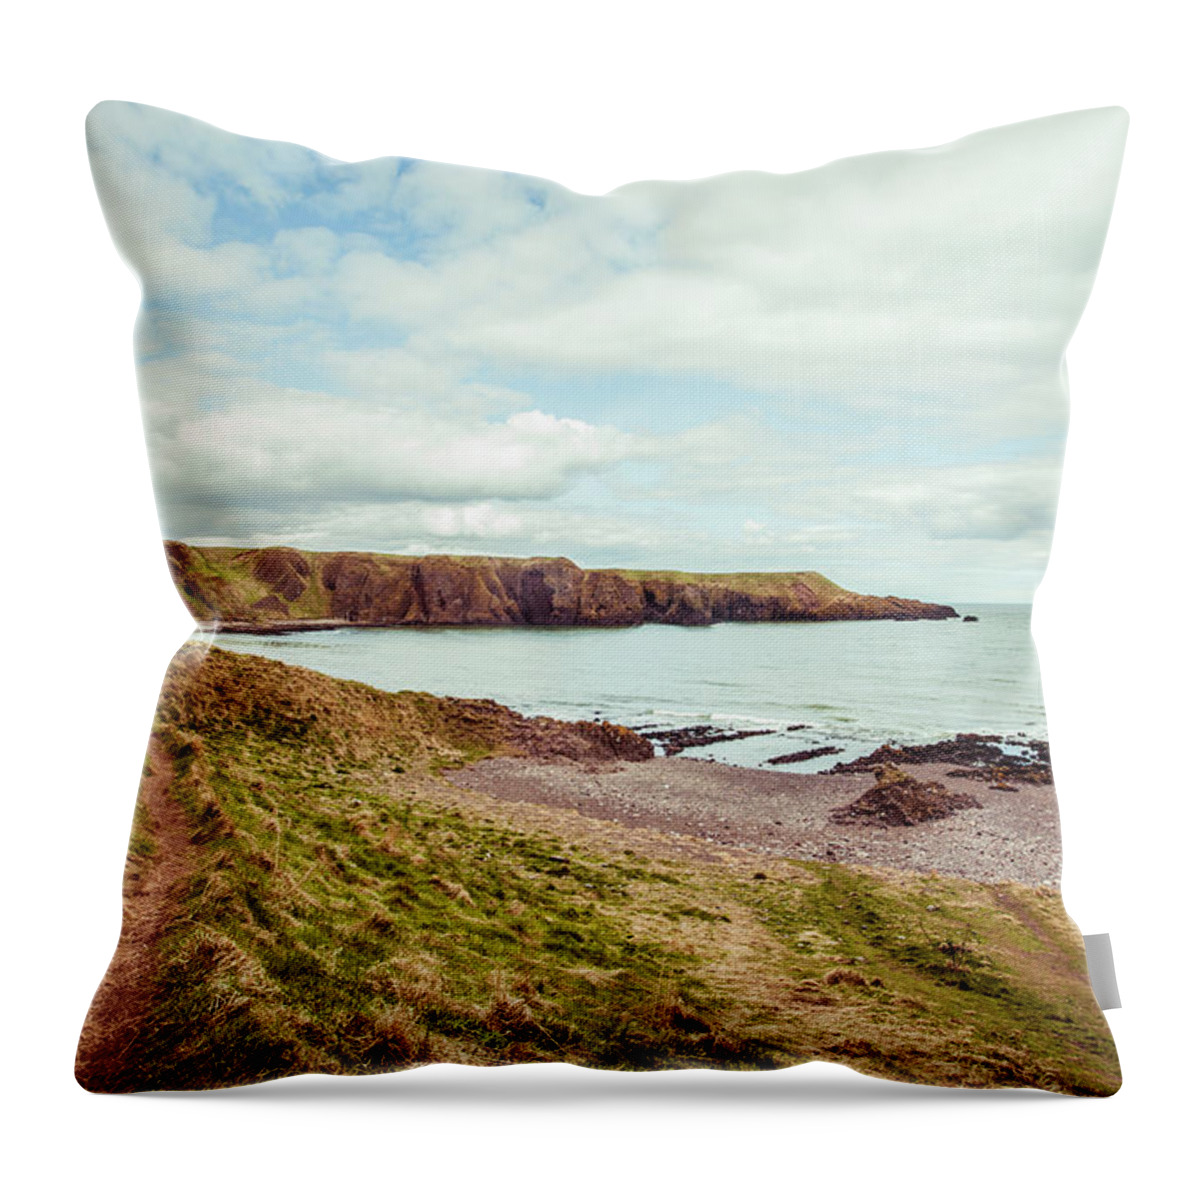 Water's Edge Throw Pillow featuring the photograph Scotland - Aberdeen by Oscar Wong